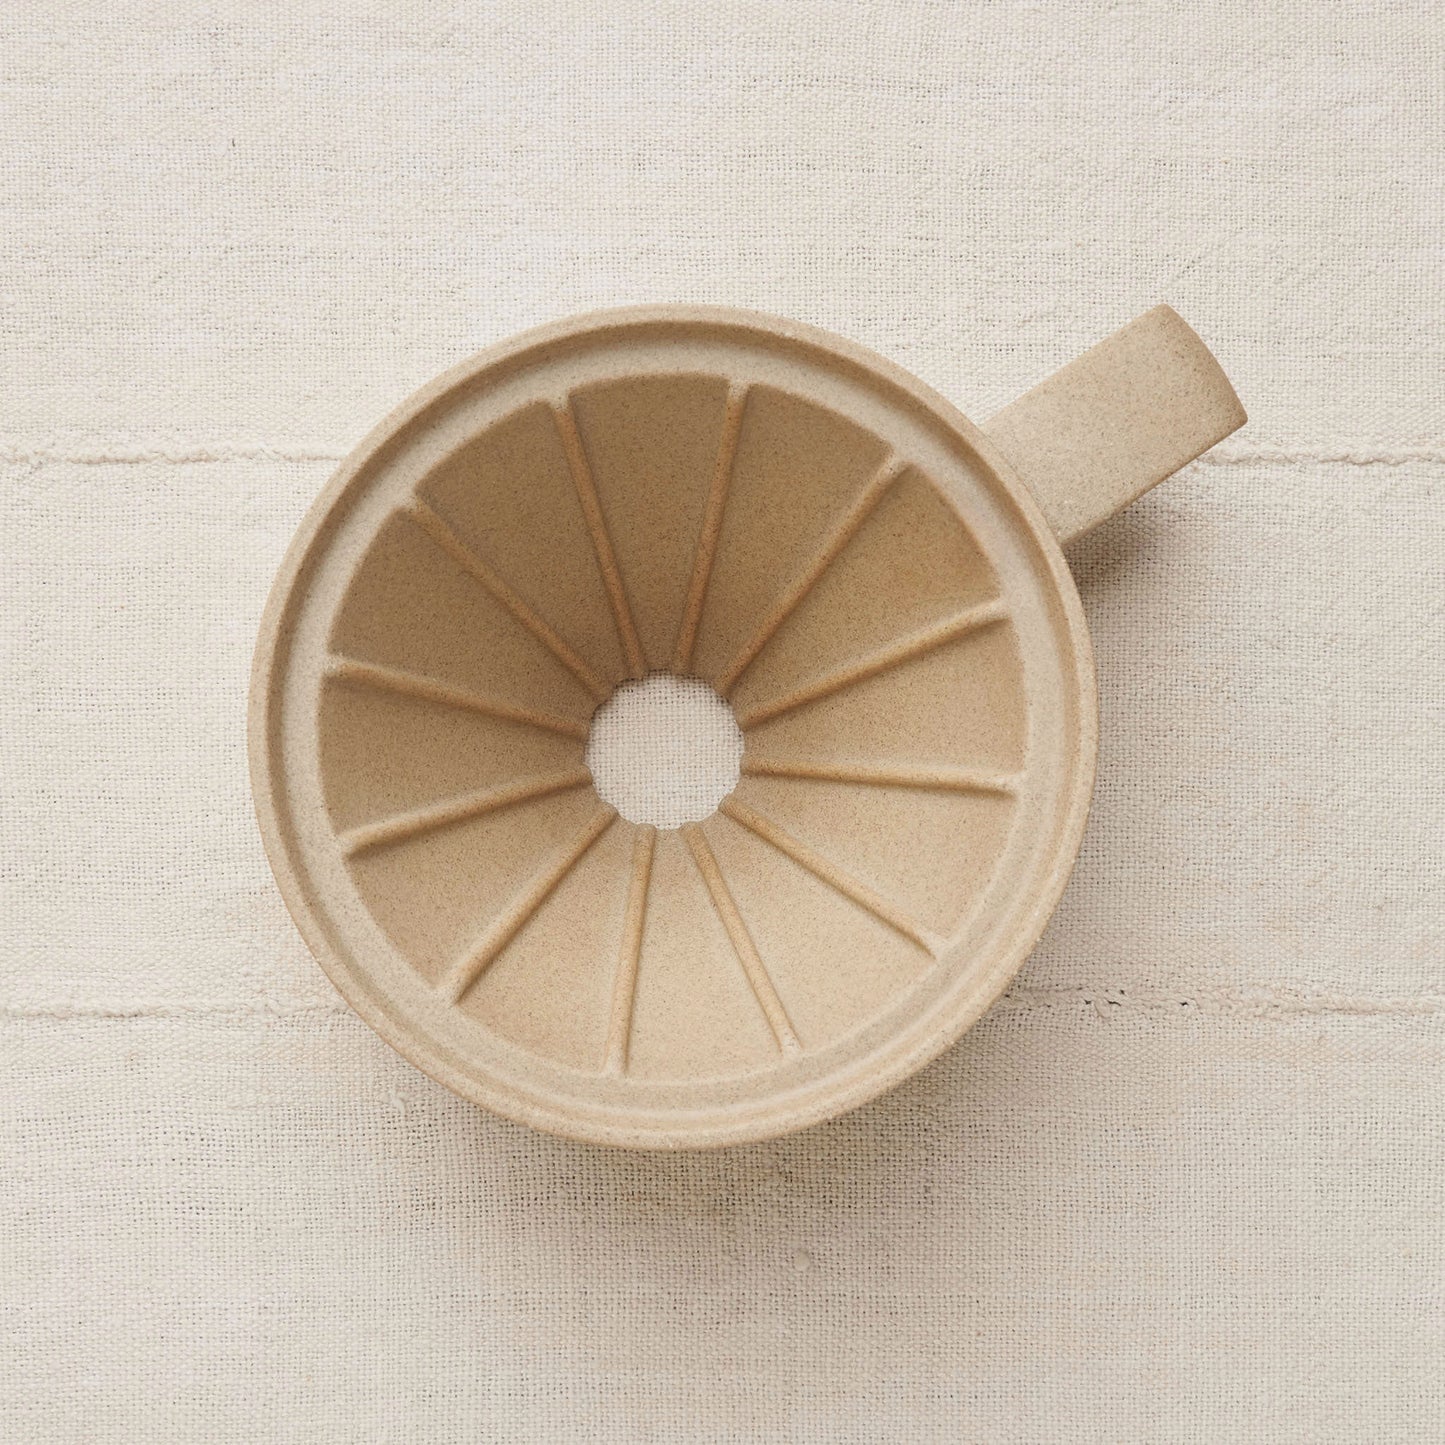 Coffee Dripper & Teapot, Unglazed Porcelain